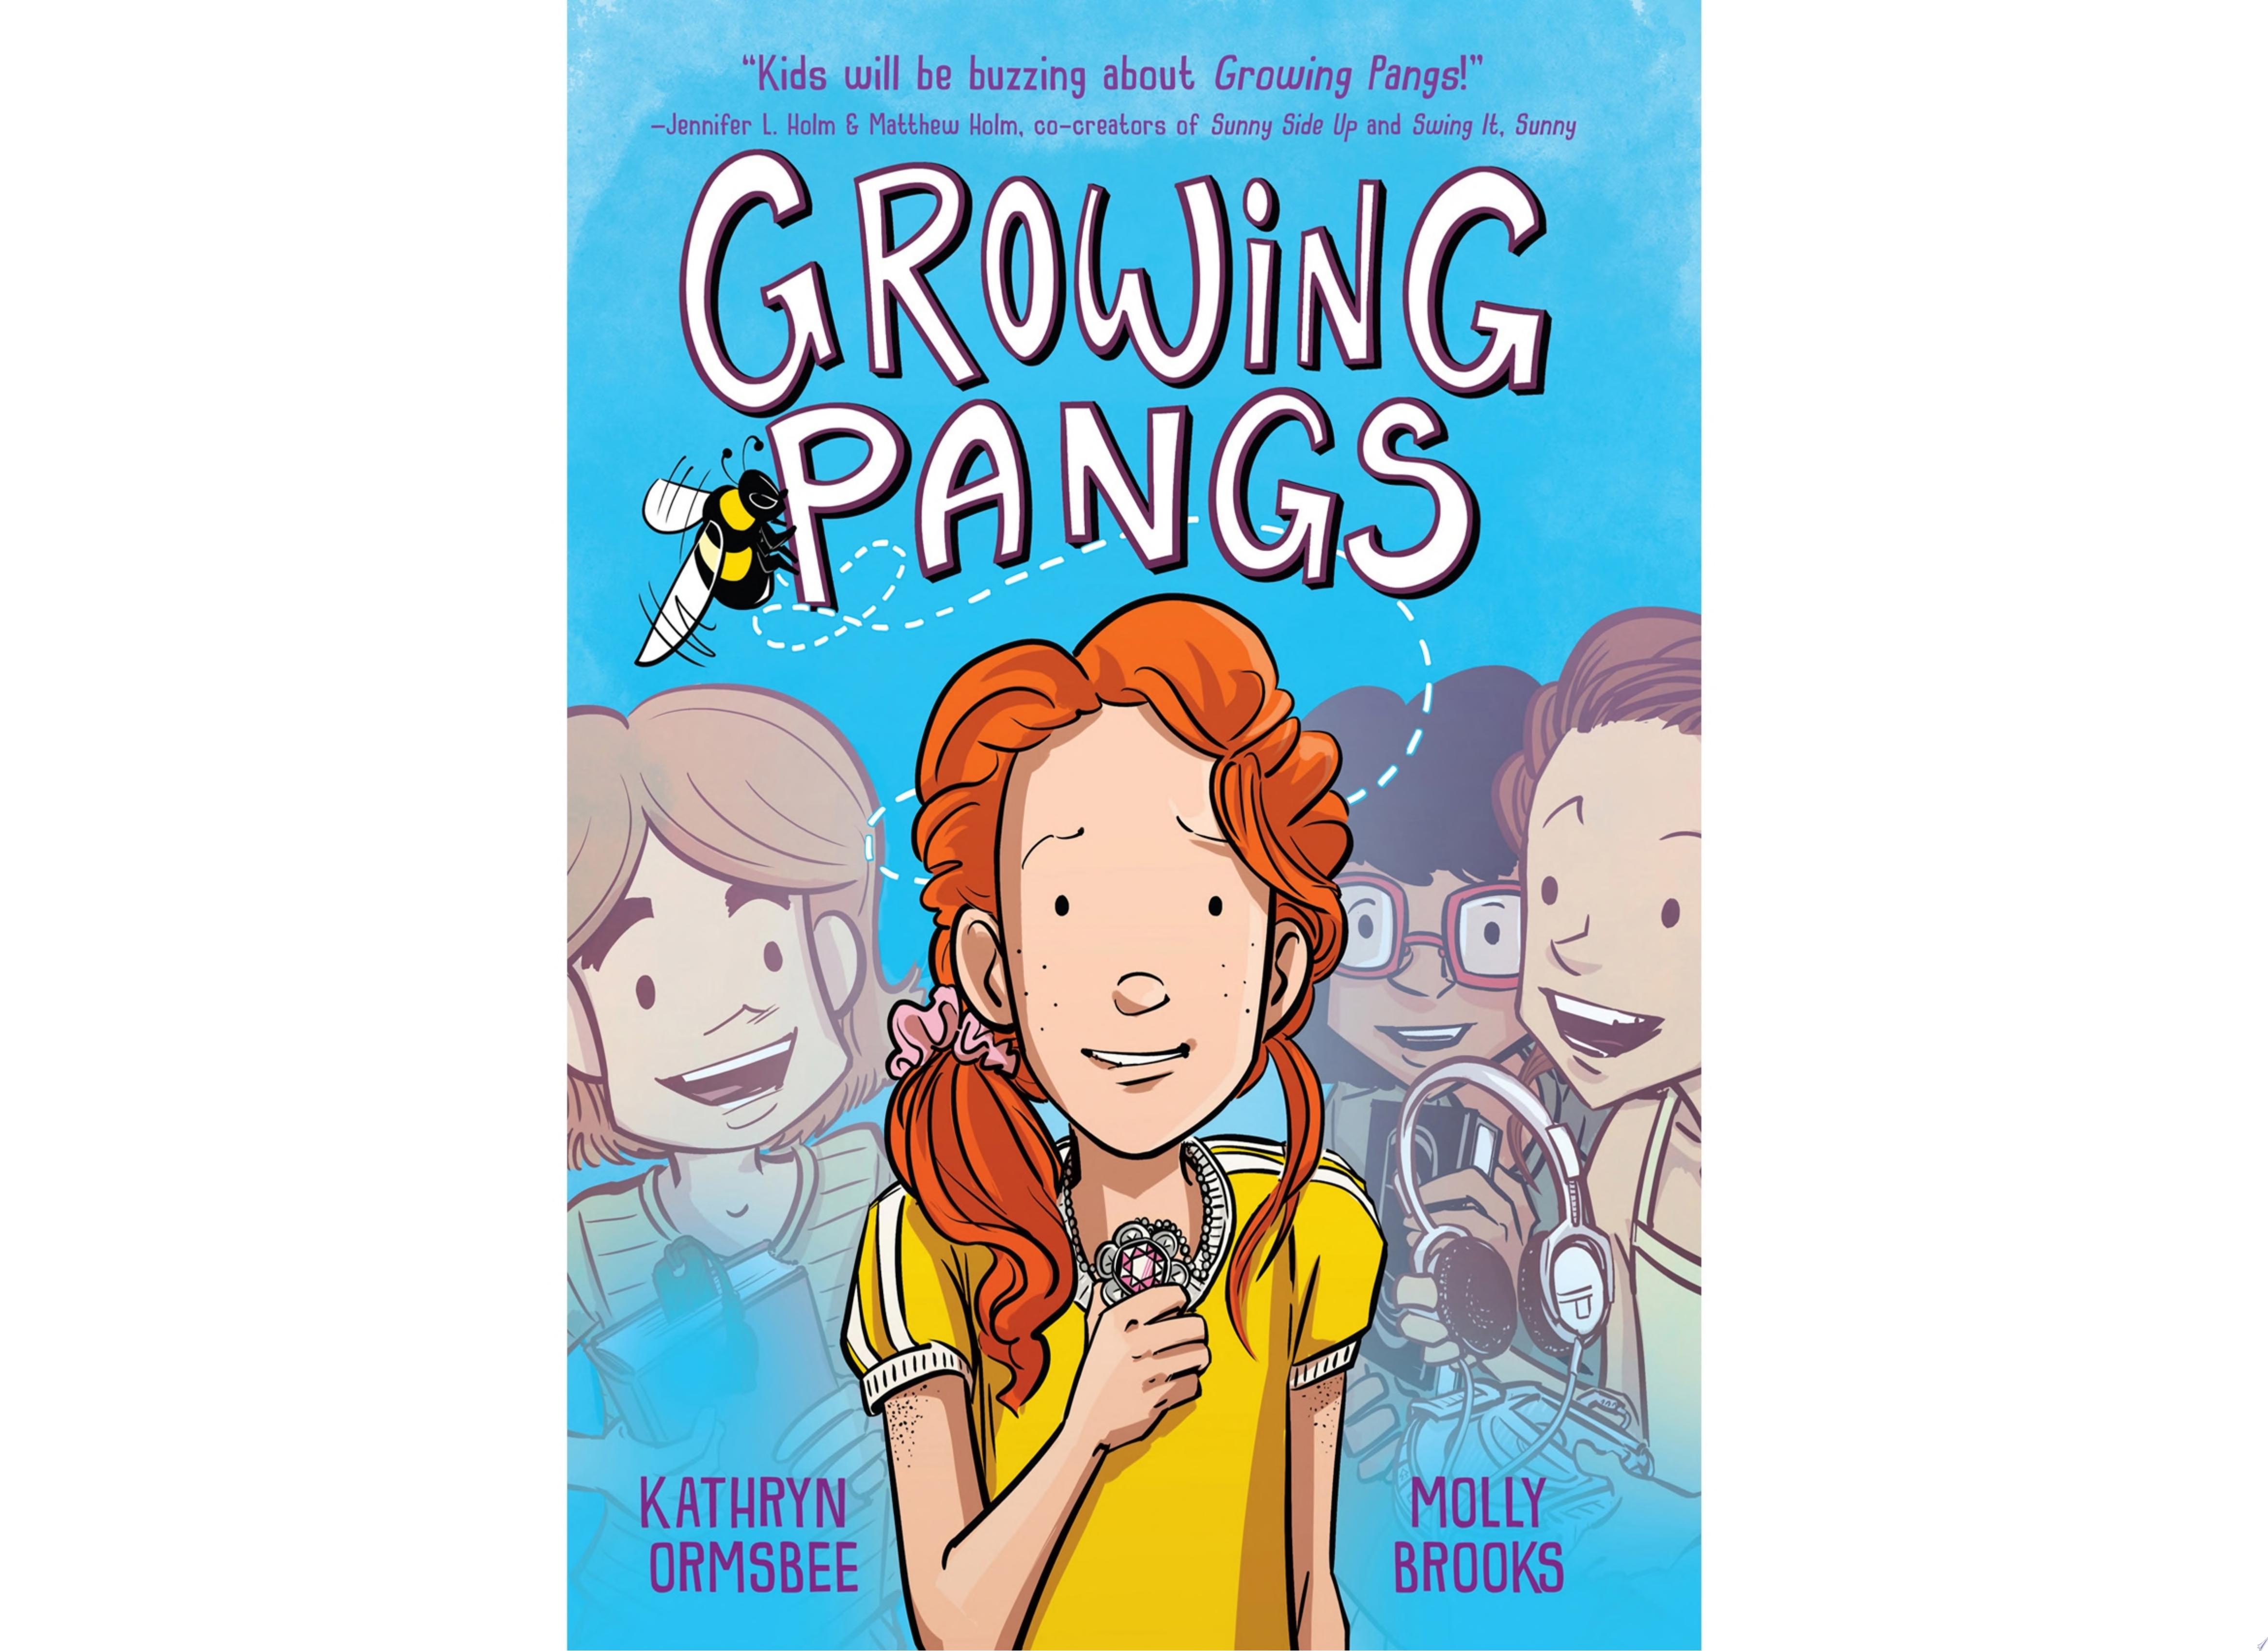 Image for "Growing Pangs"